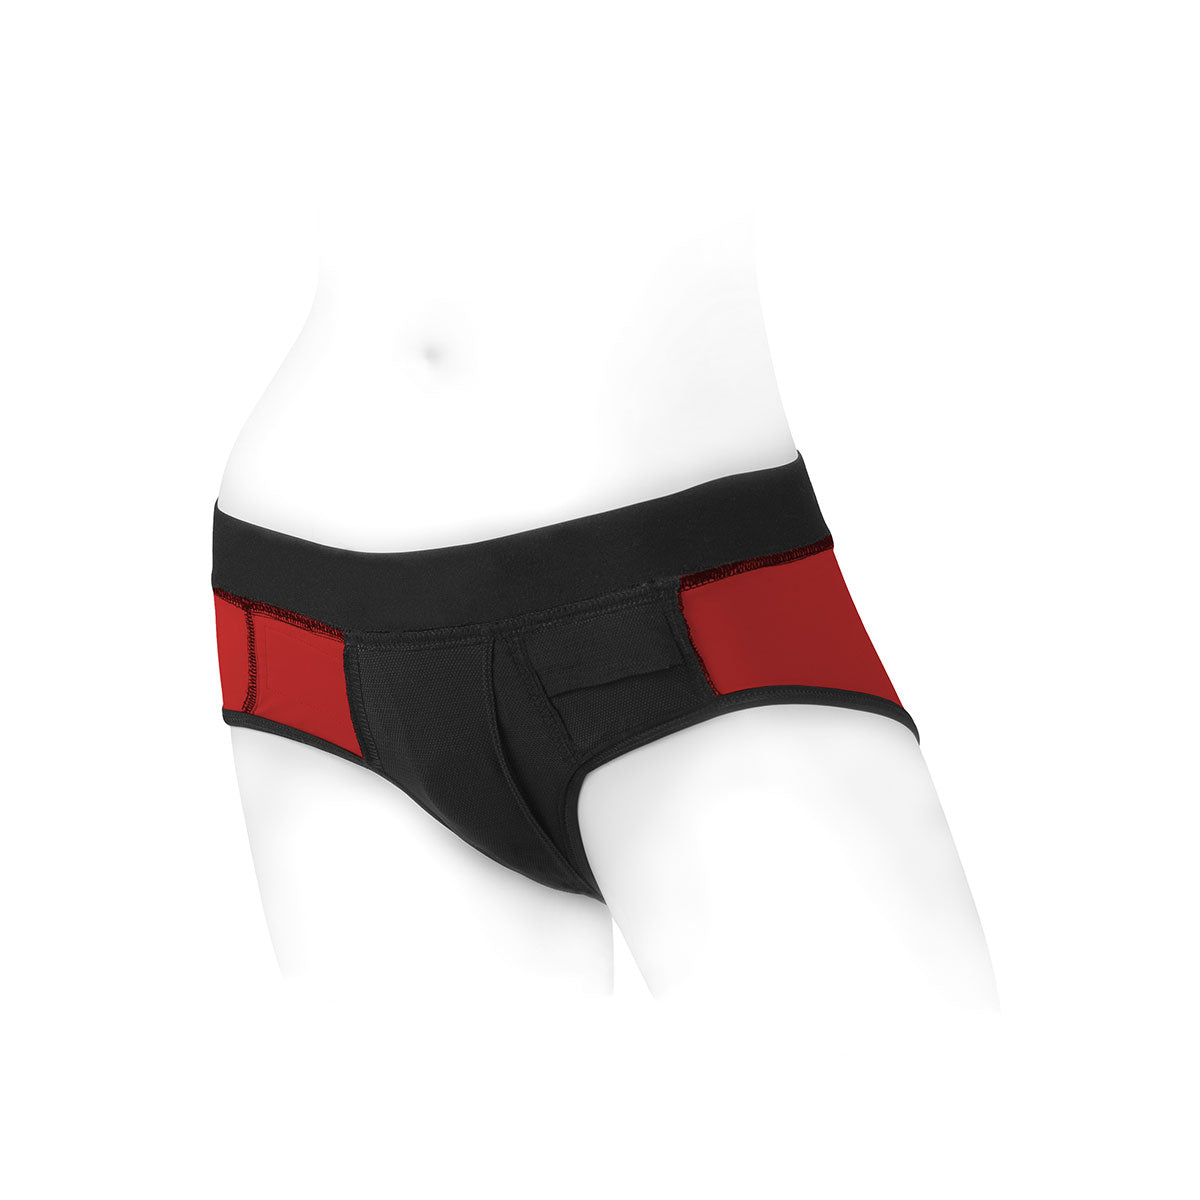 SpareParts Tomboi Harness Red/Black Nylon - 2X